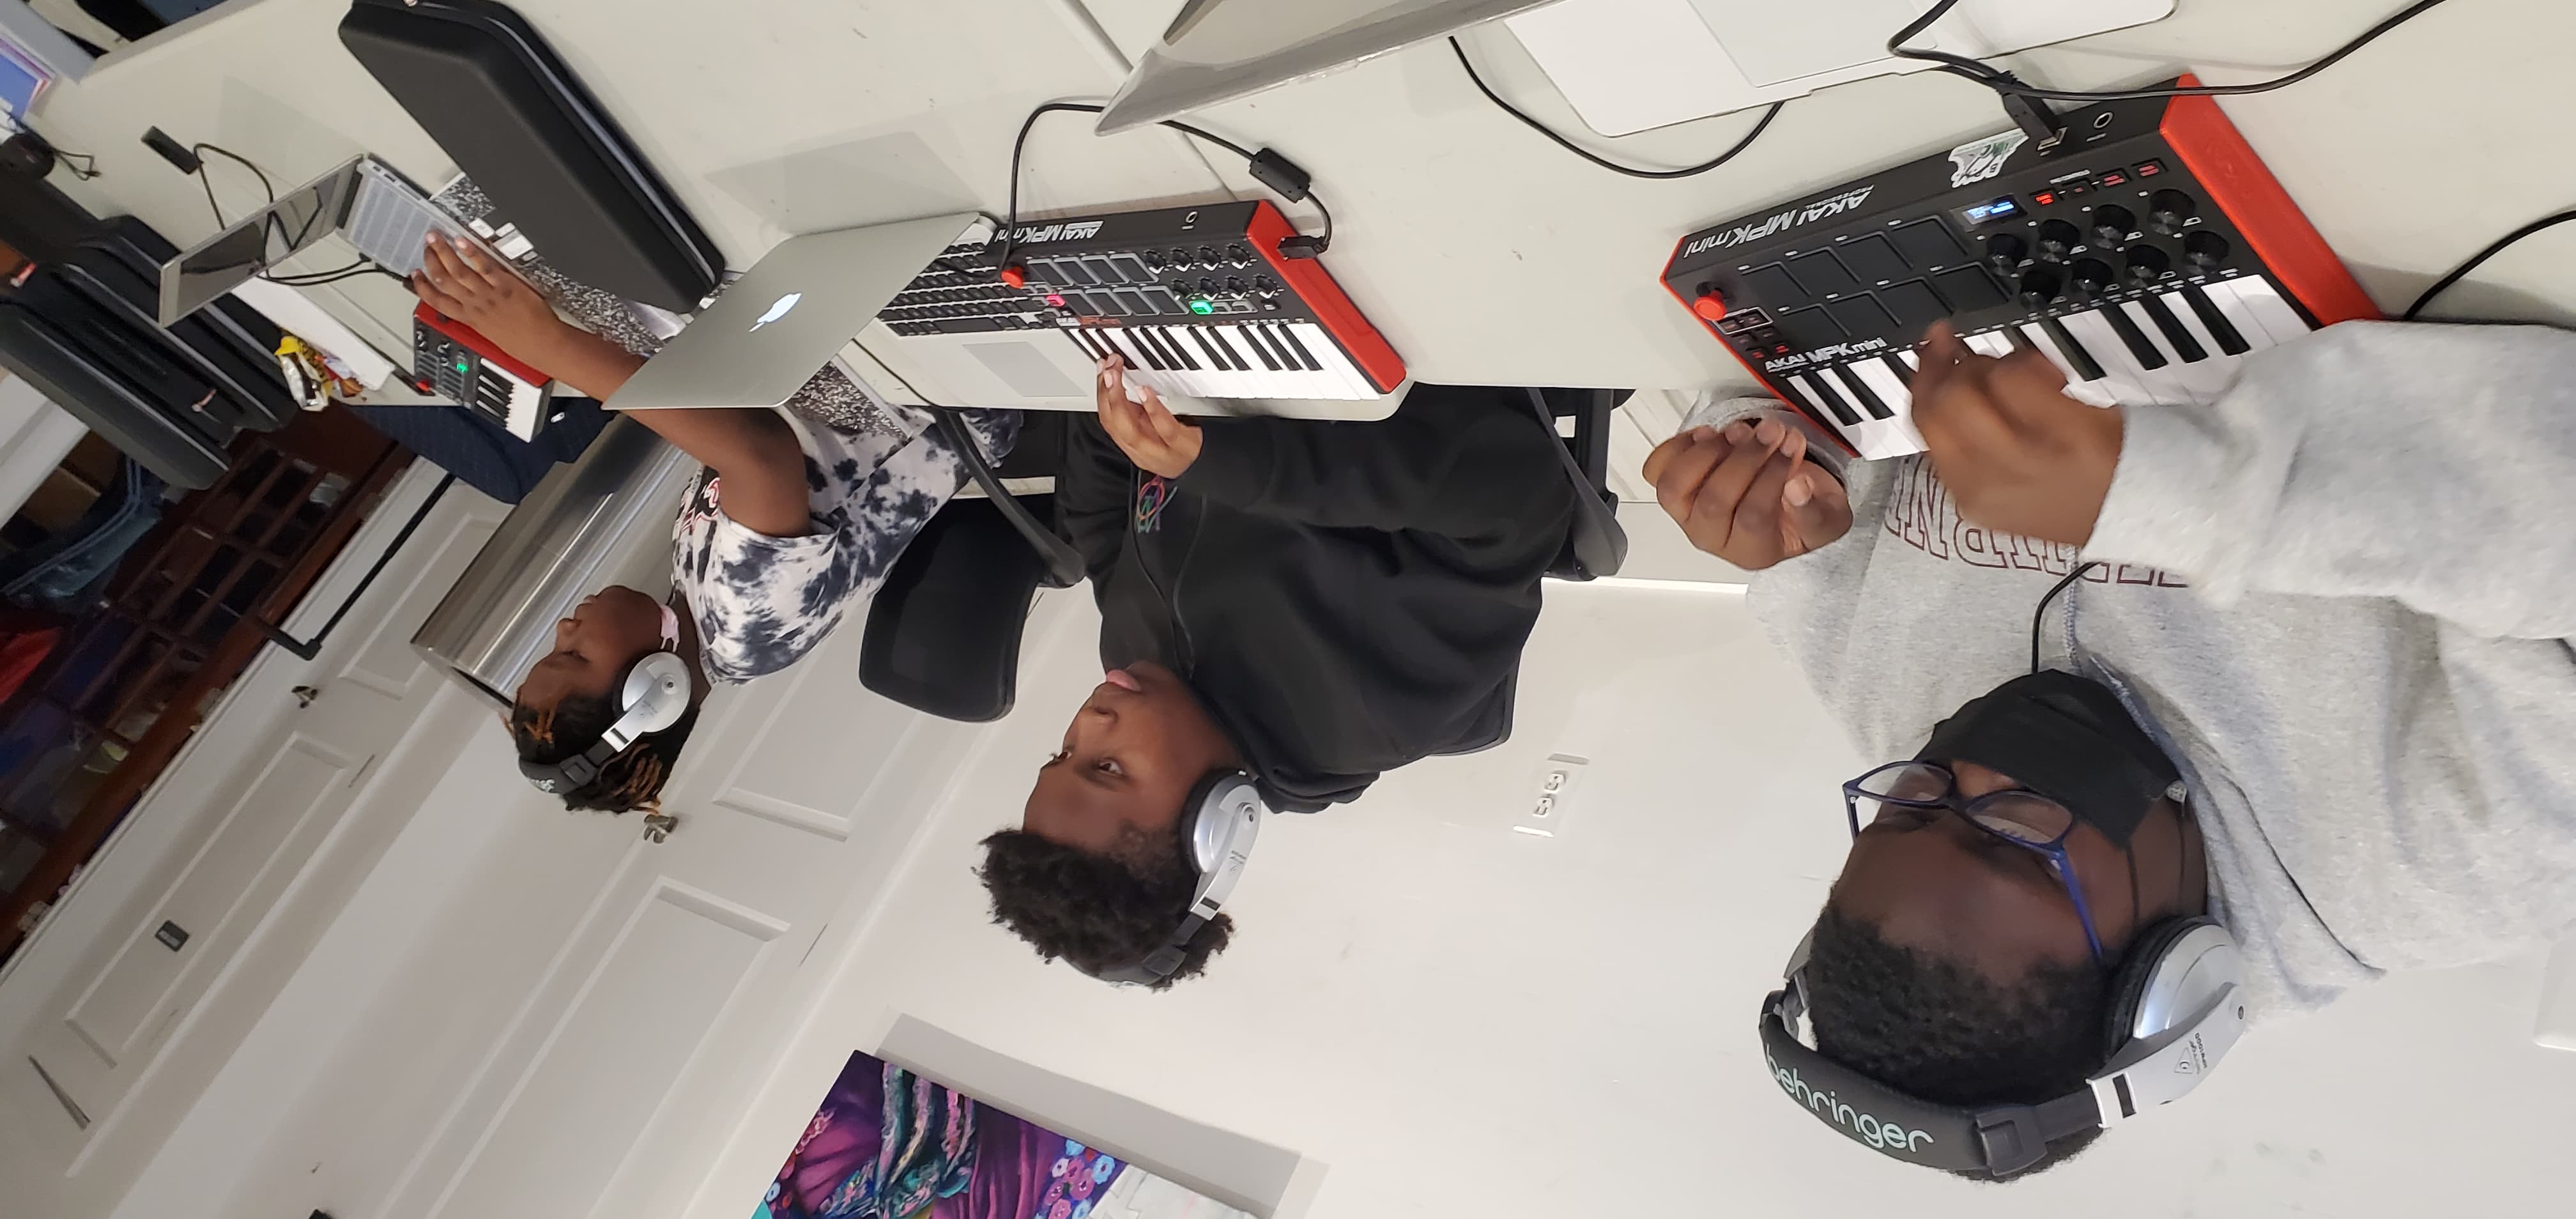 Kids creating instrumental music on laptops